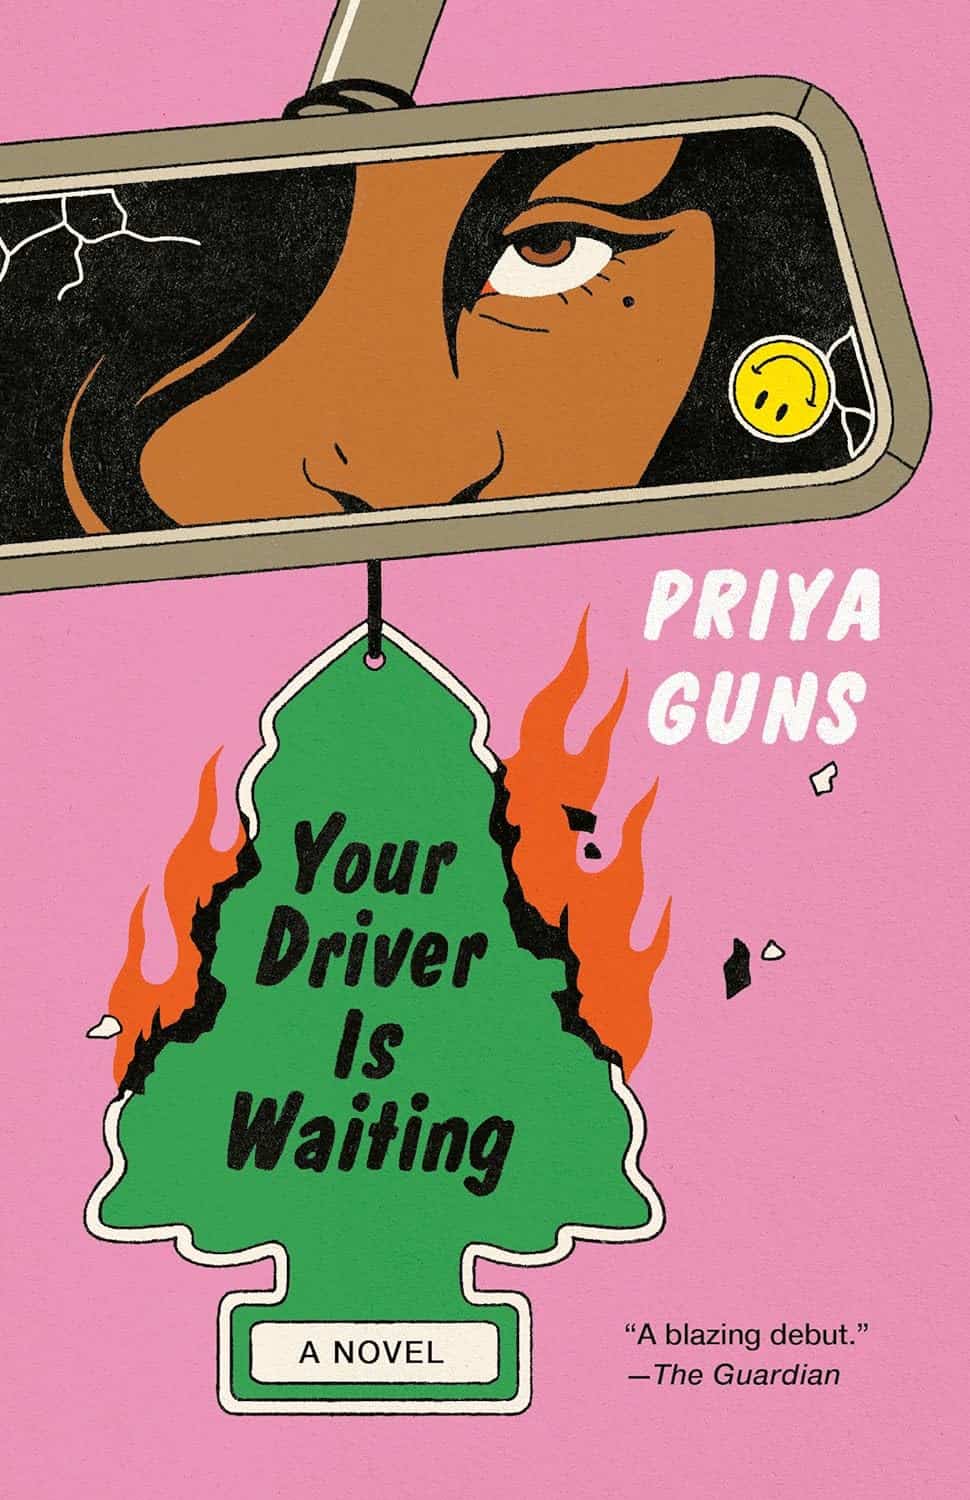 Your Driver Is Waiting, by Priya Guns